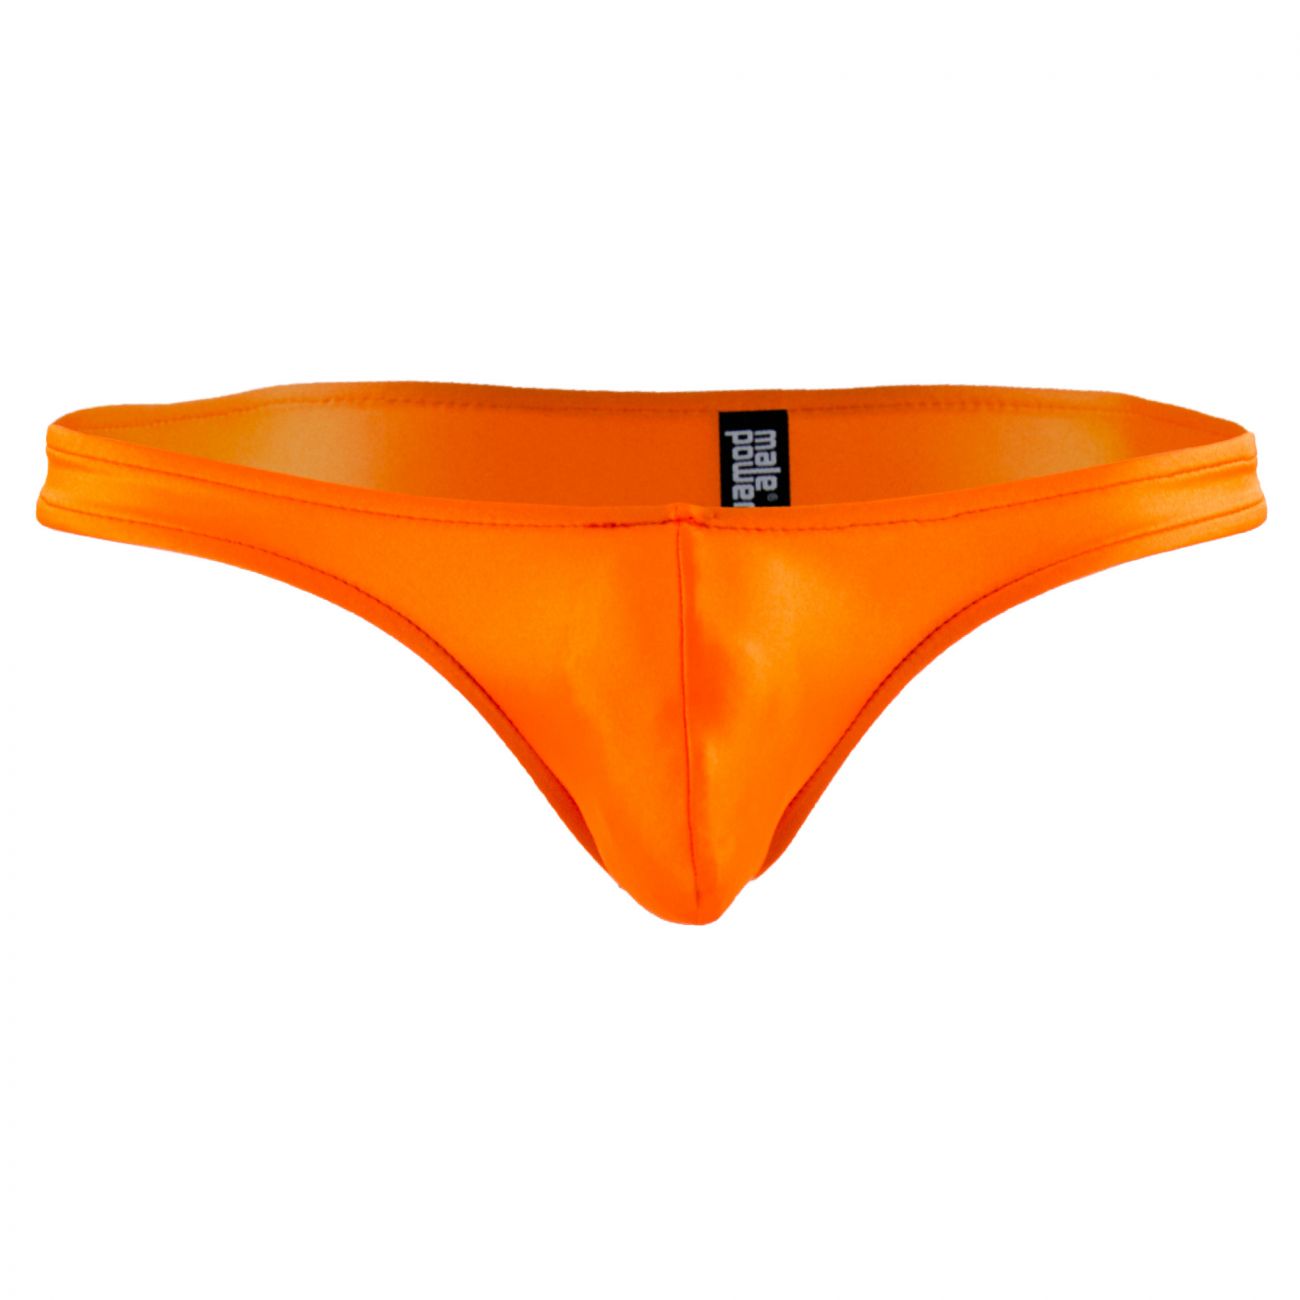 Mens Underwear: Male Power PAK874 Euro Male Spandex Full Cut Thong | eBay